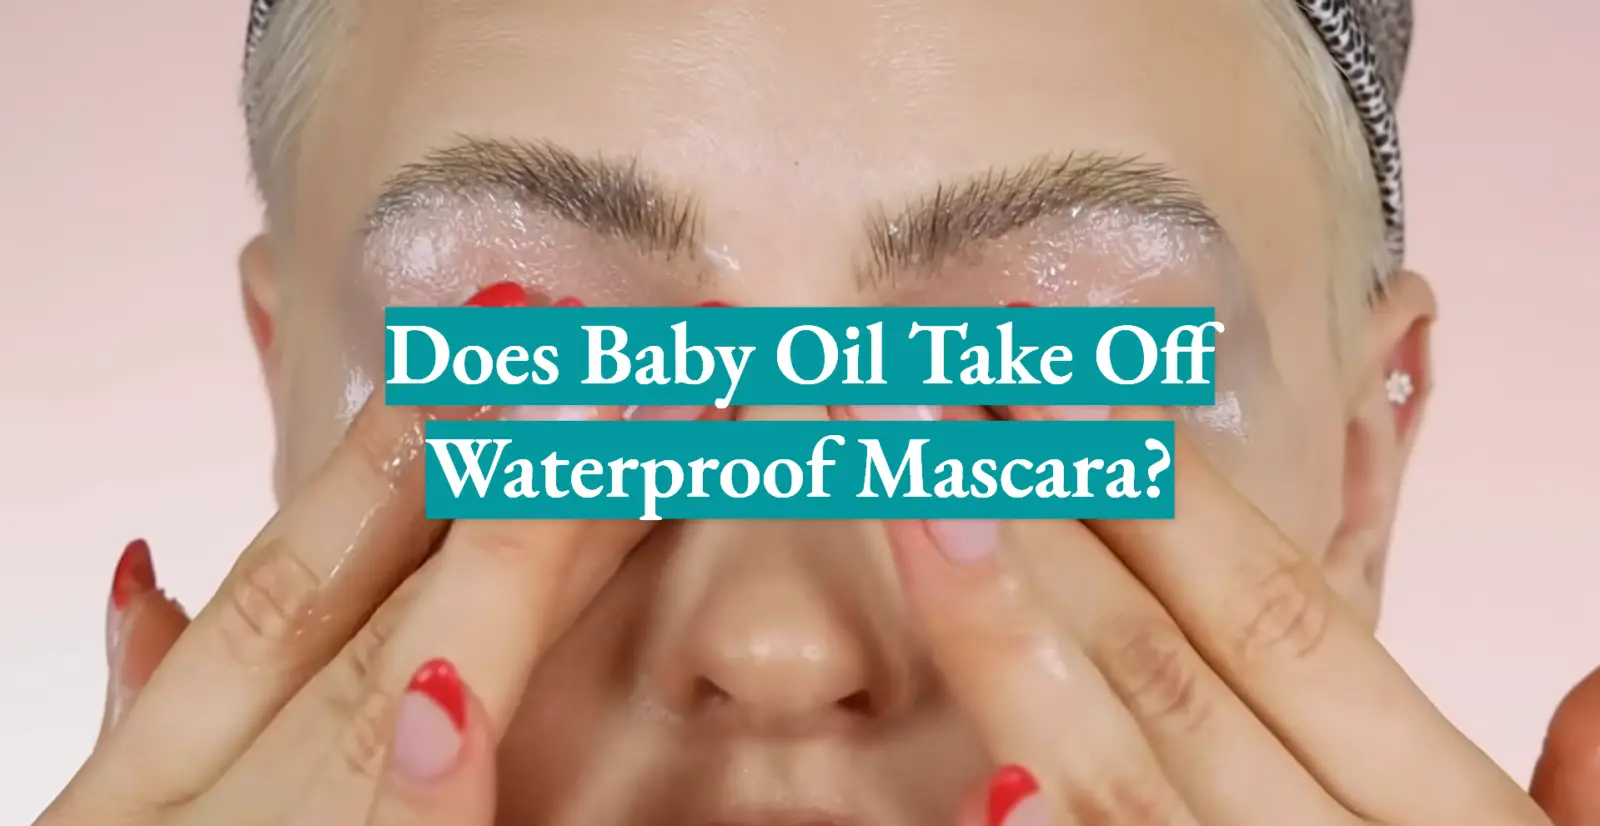 Does Baby Oil Take Off Waterproof Mascara?